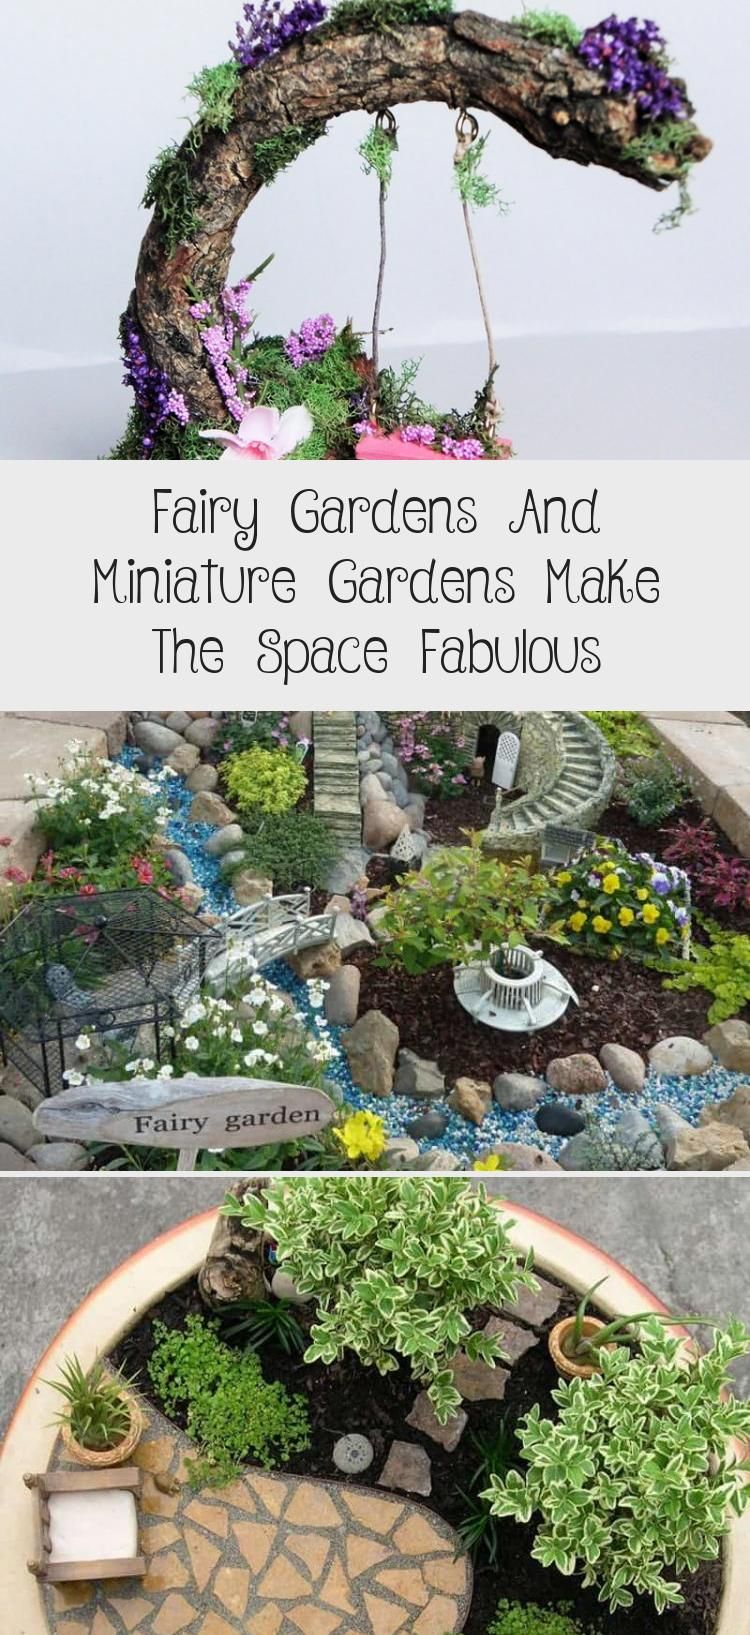 Vorgartengestaltung Modern Inspirierend Fairy Gardens and Miniature Gardens Make the Space Fabulous